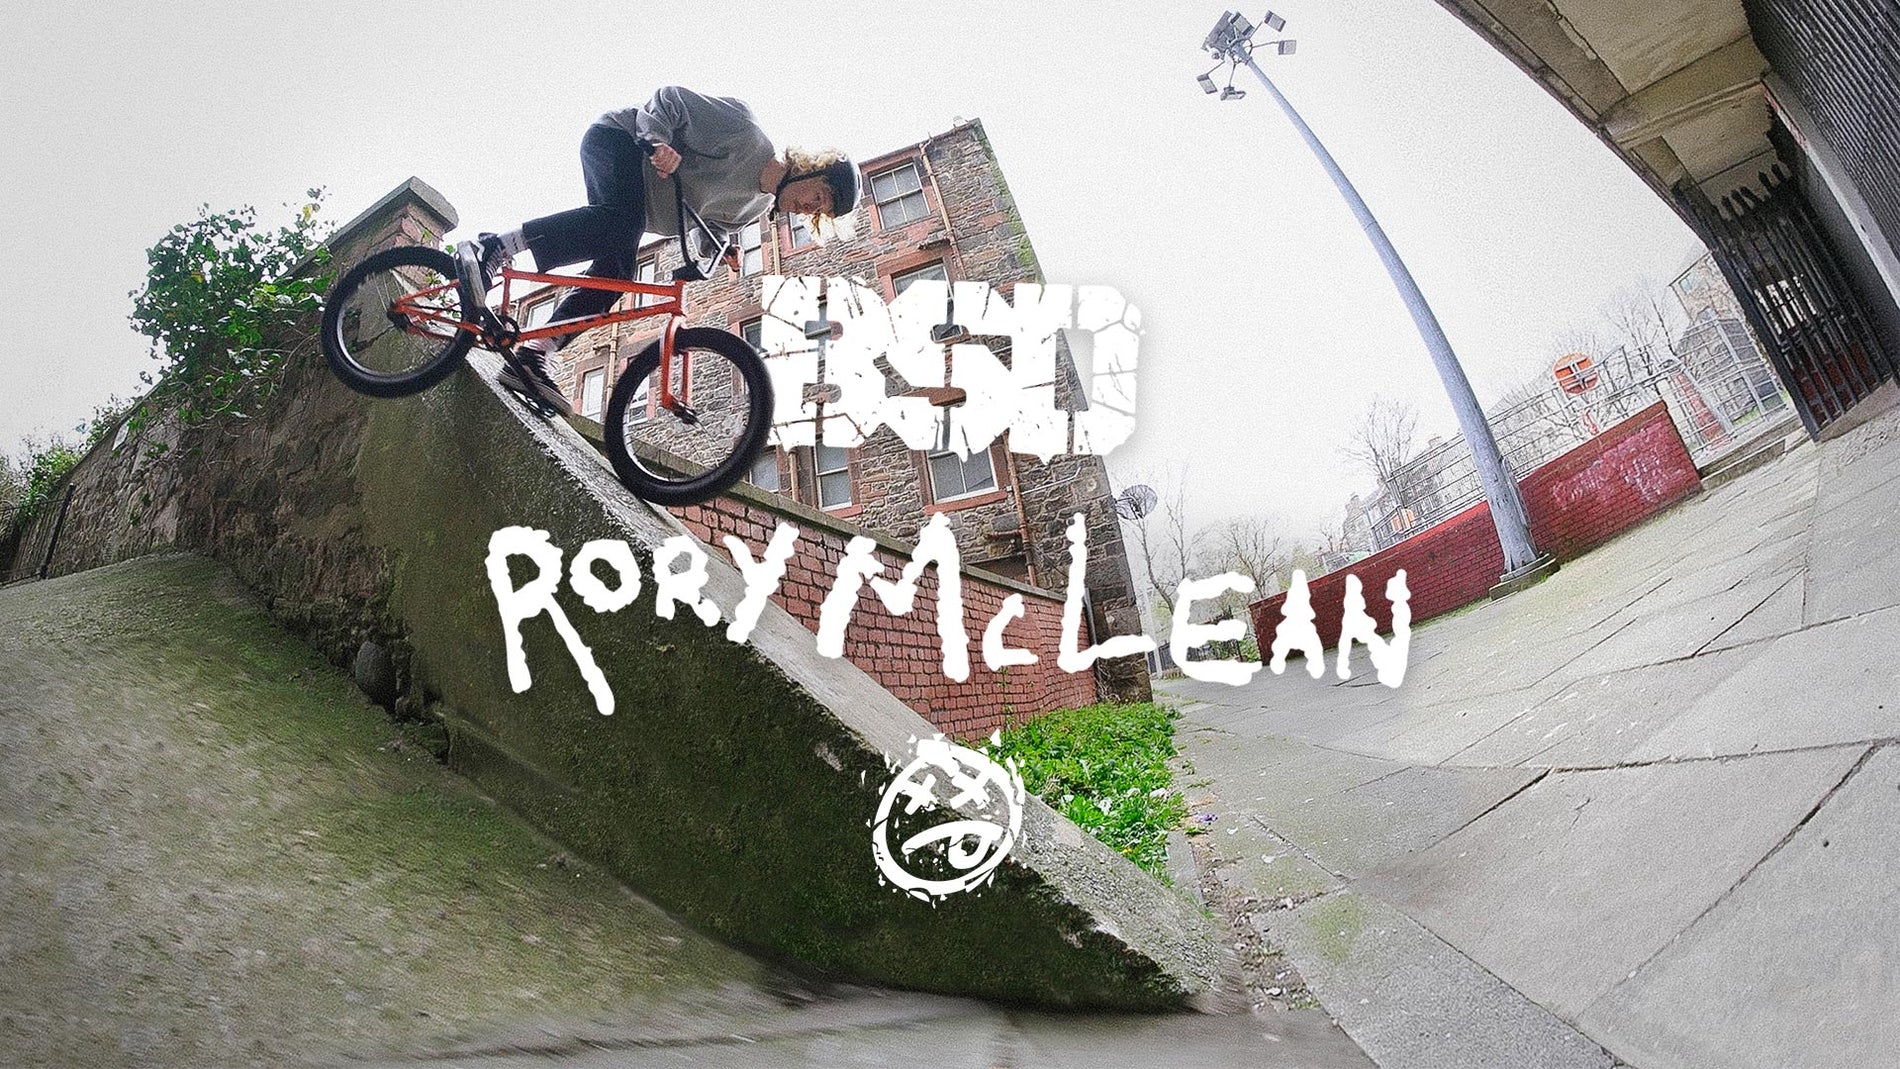 New BSD Rory Mclean Video